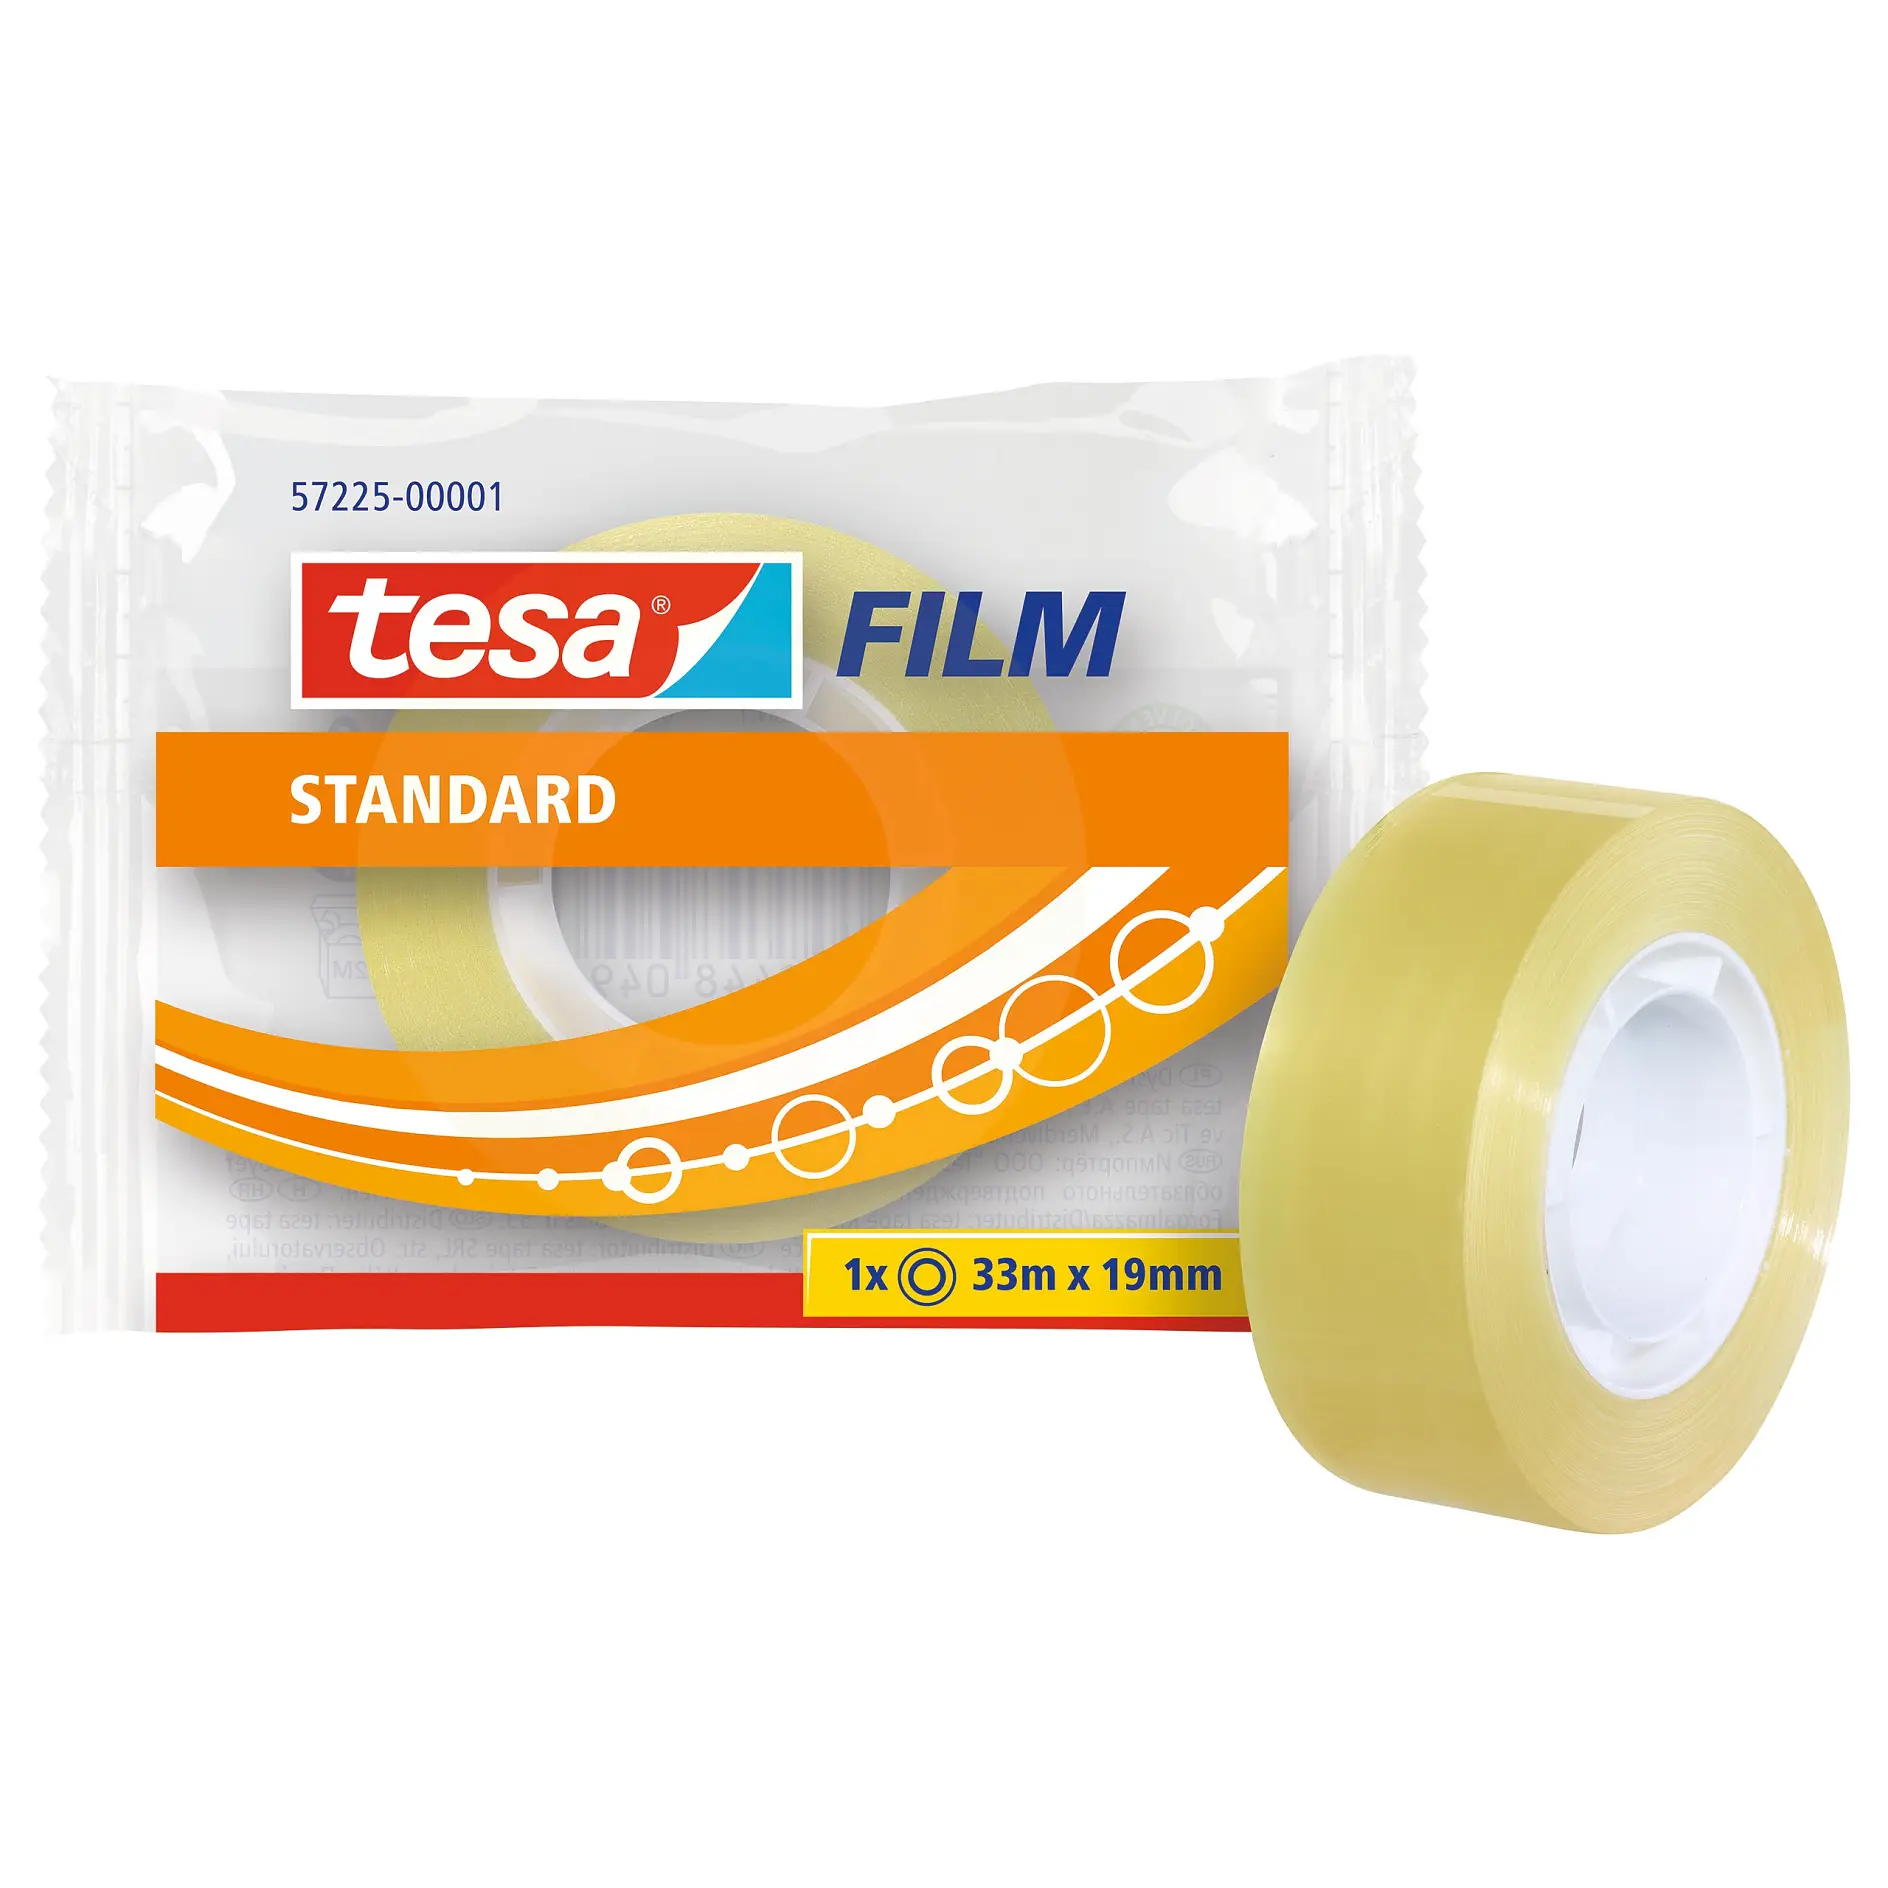 [en-en] 1x tesafilm standard 33m x 19mm Flowpack + 1x tesafilm standard